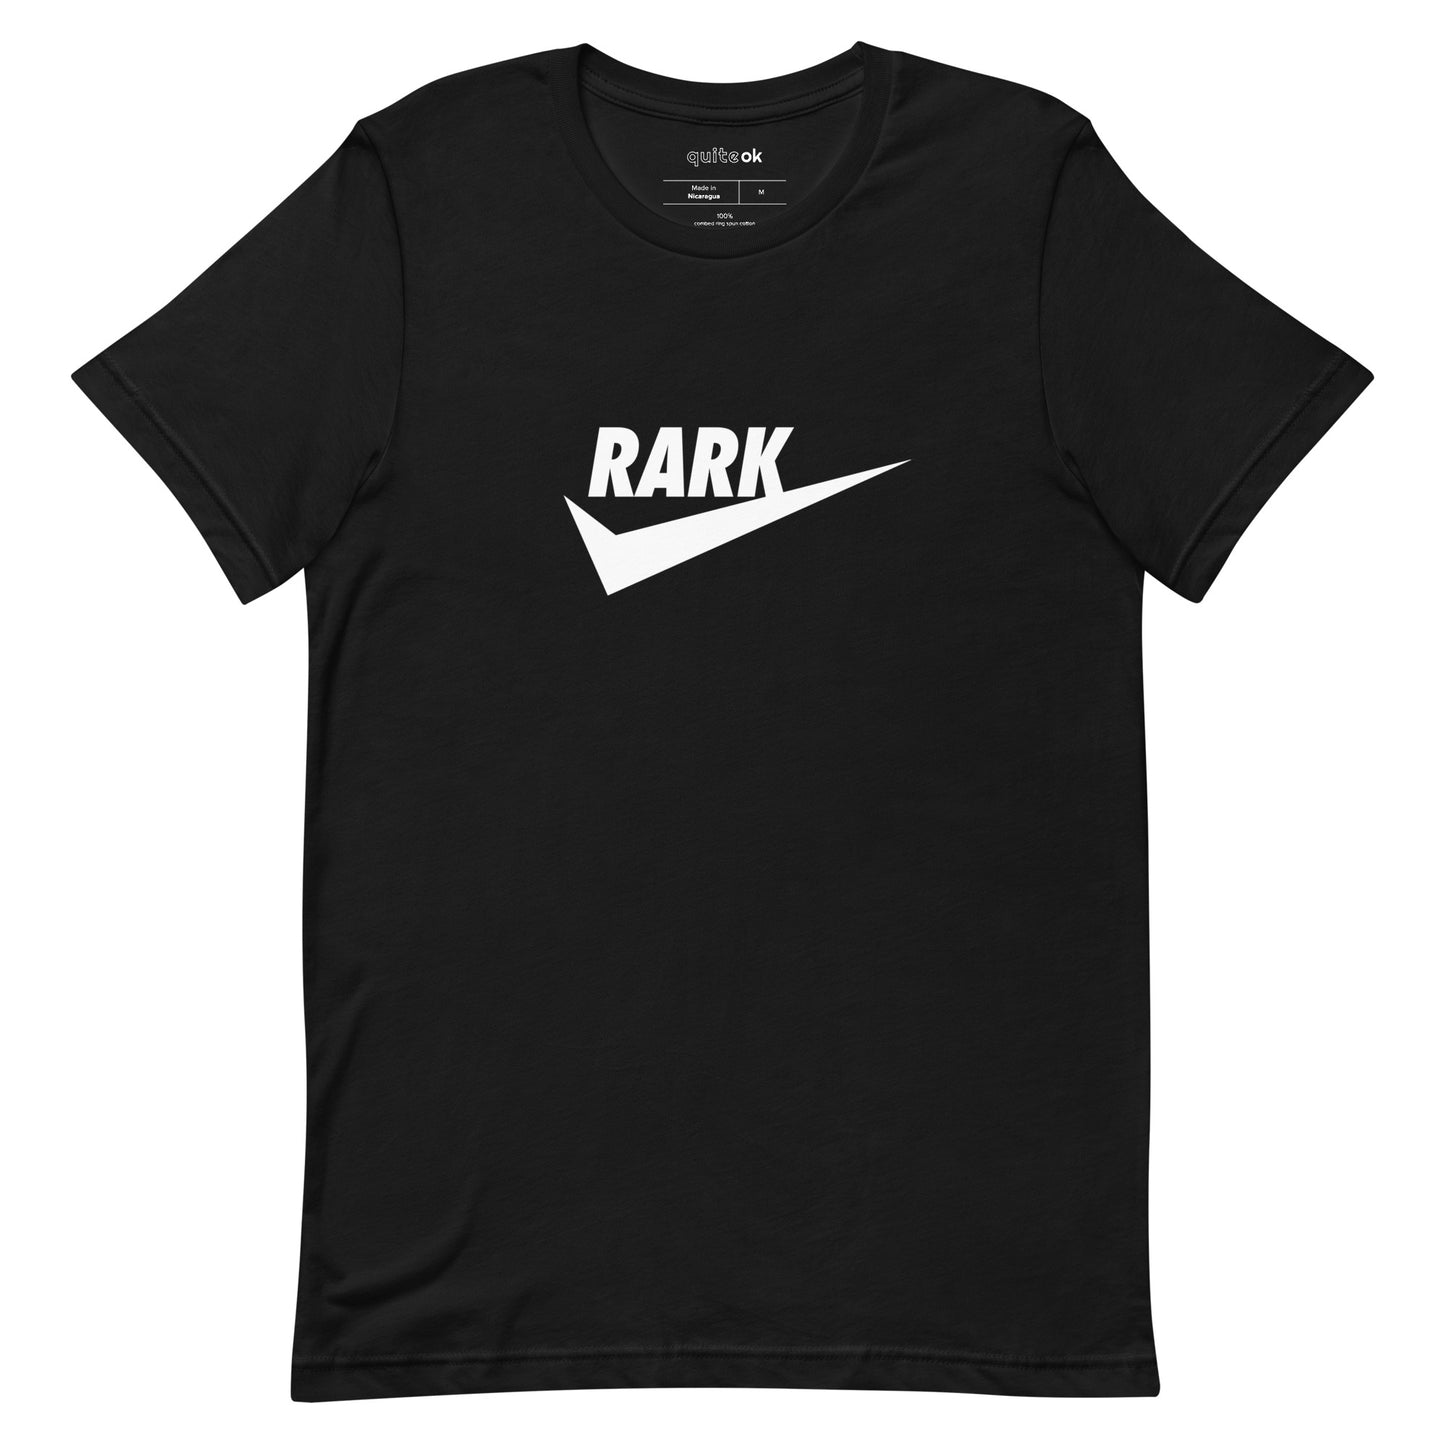 Rark Comedy Quote T-Shirt